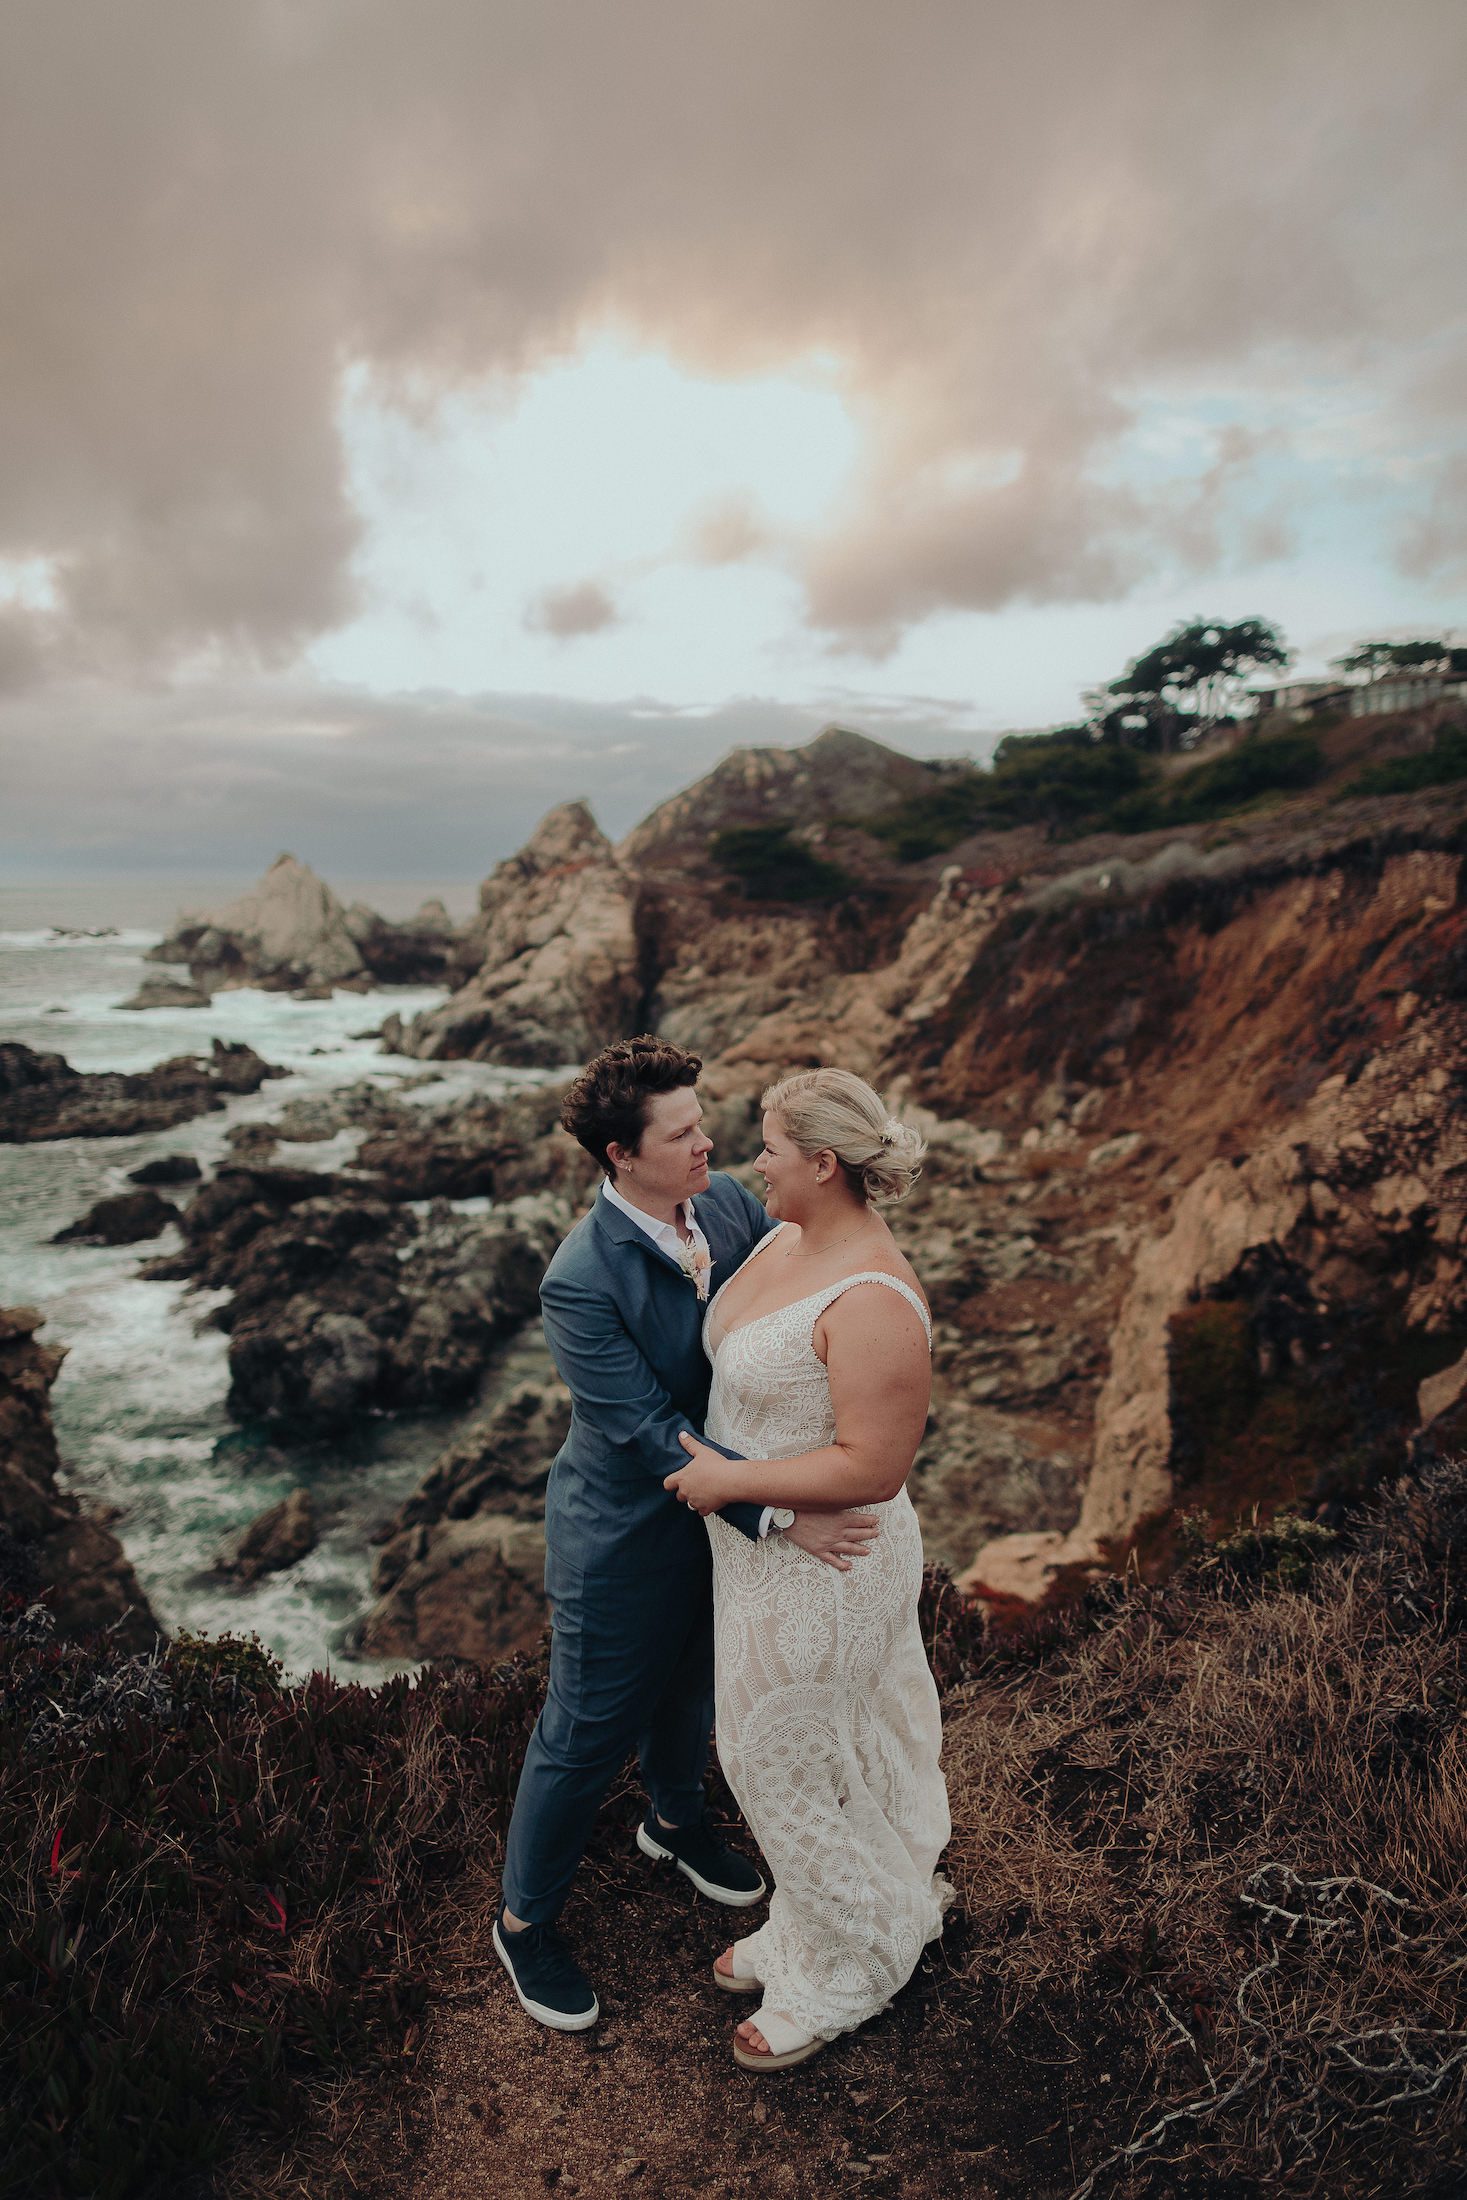 Wedding in Big Sur, Big Sur Wedding, Big Sur Wedding Photographer, San Luis Obispo Wedding Photographer, James Lester Photography